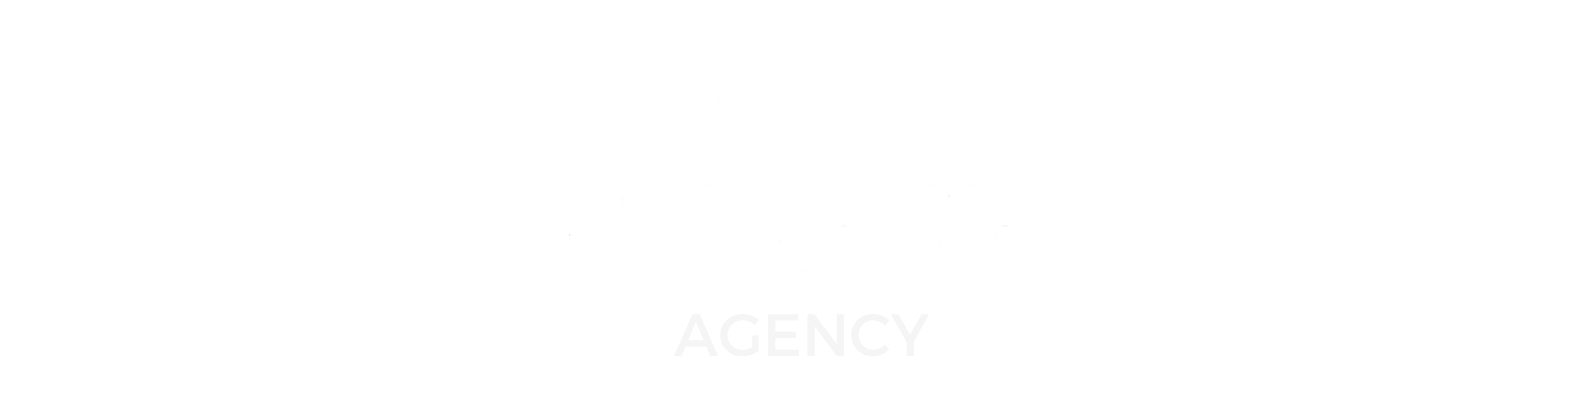 Supreme Agency Dallas digital Marketing Agency - www.supremeagency.com